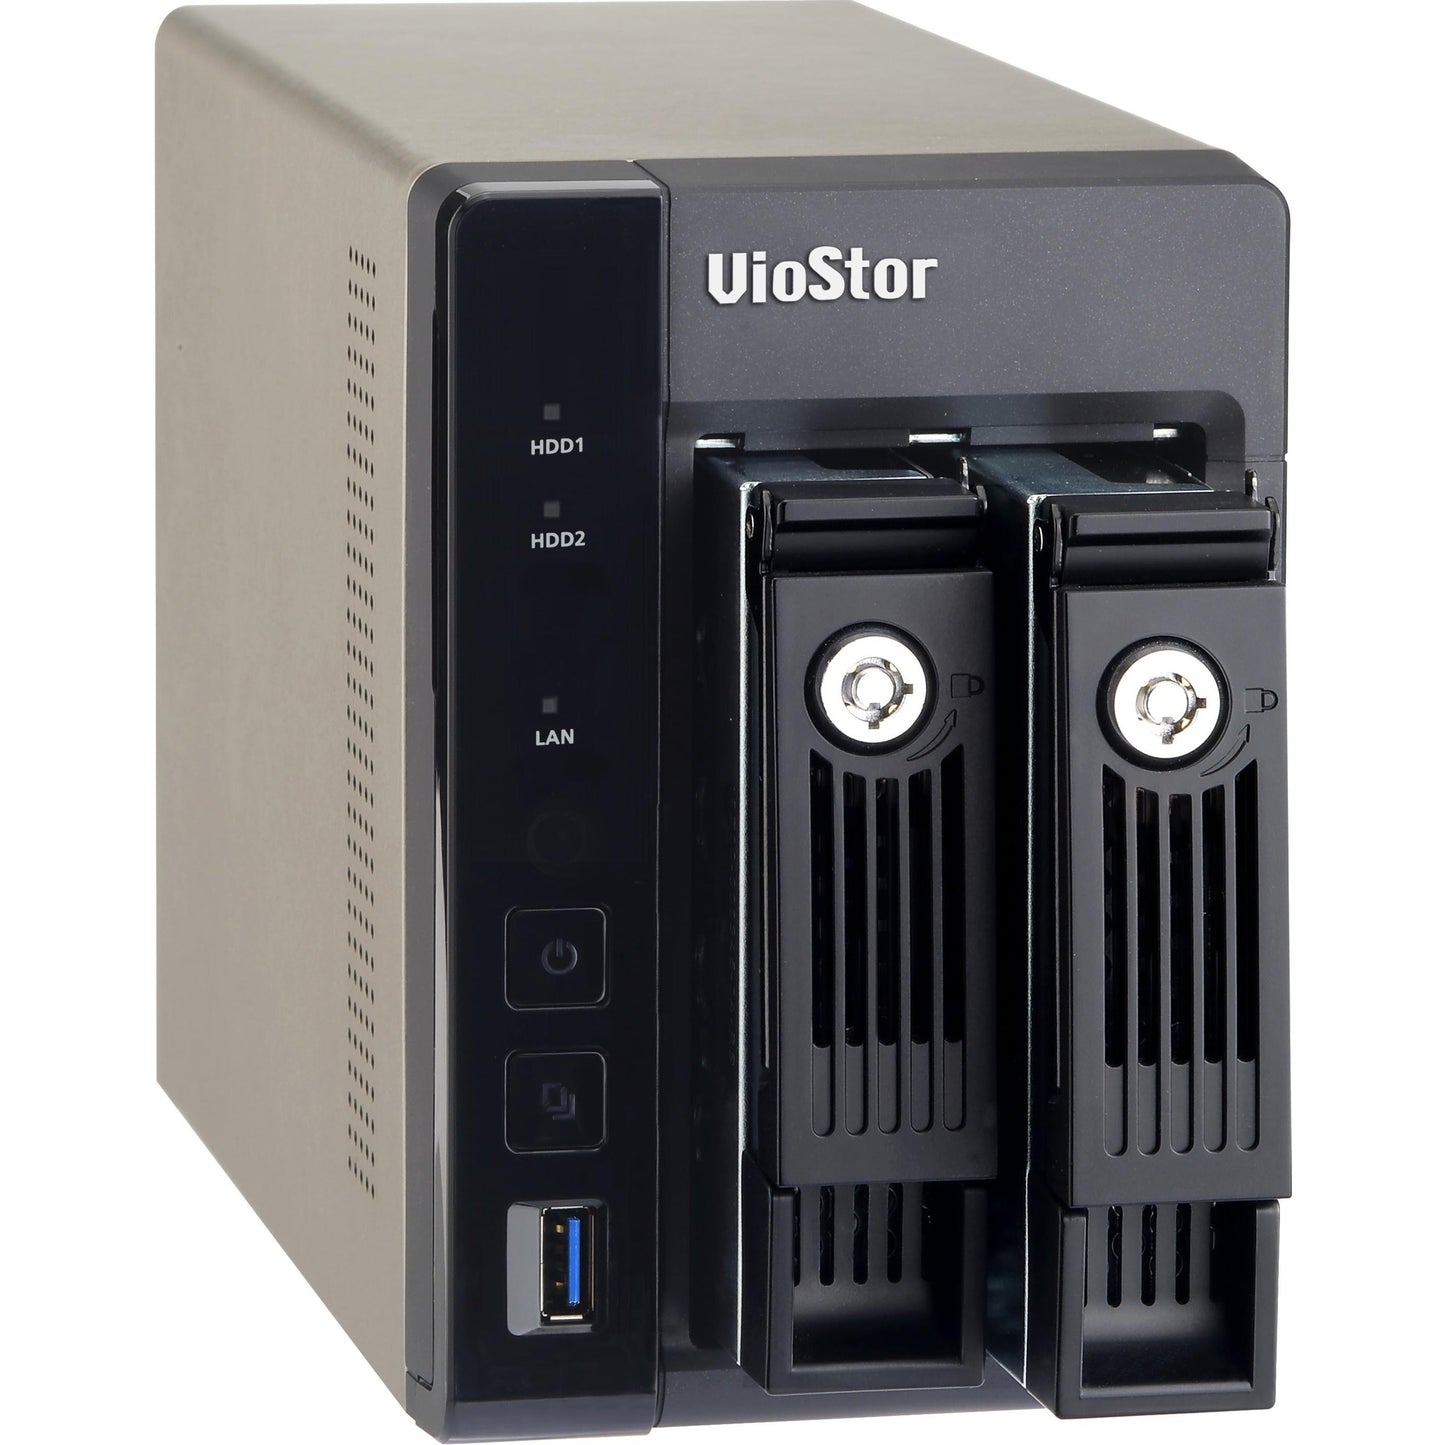 QNAP VioStor VS-2200 Pro+ Network Video Recorder